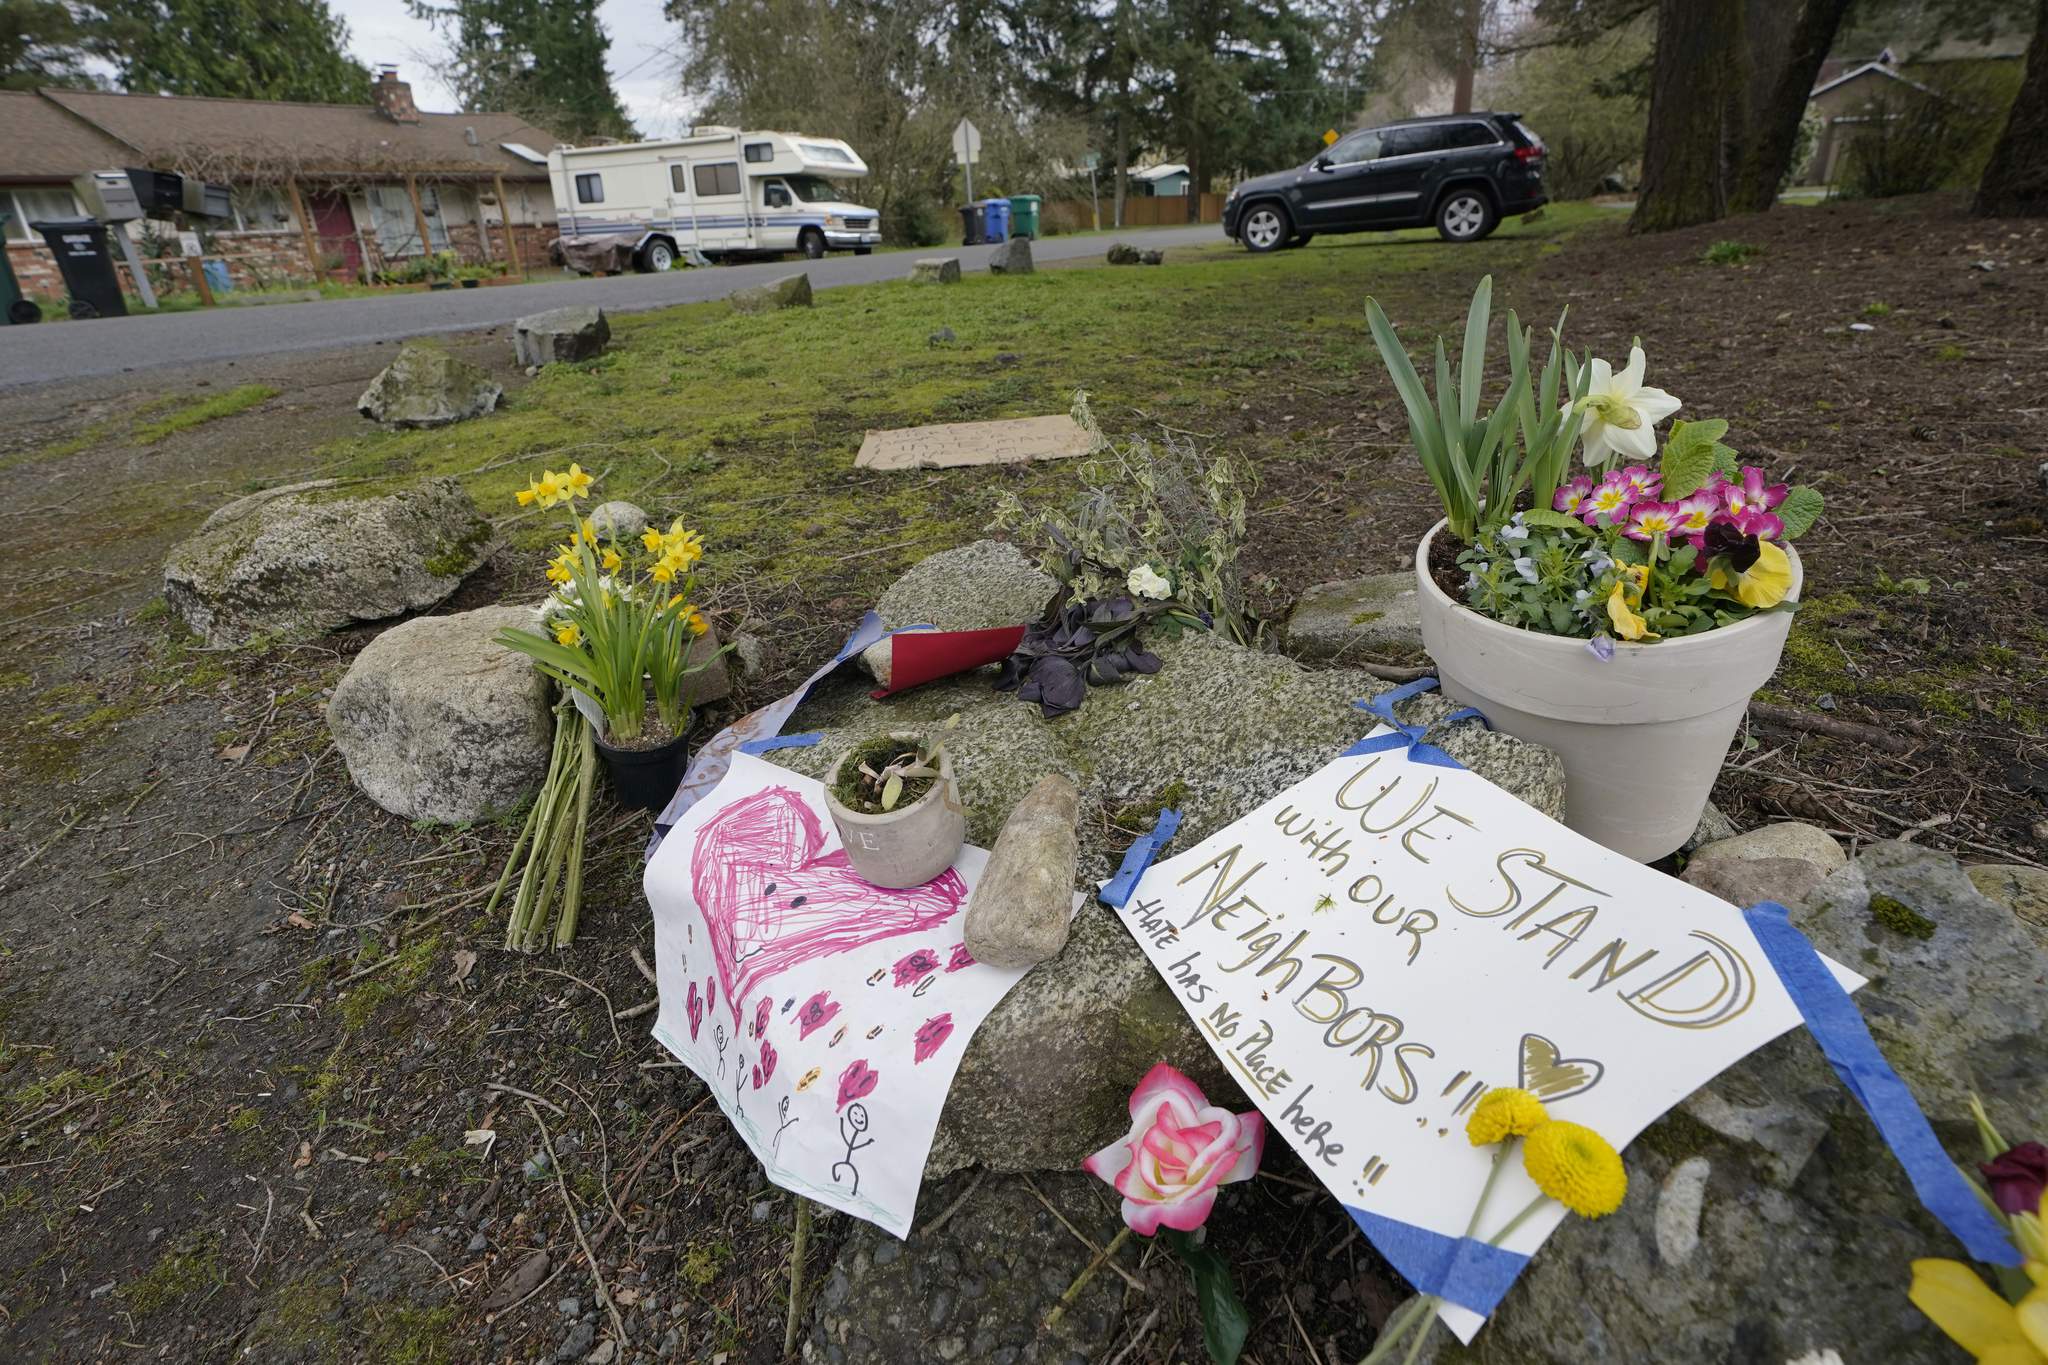 Asian Americans grieve, organize in wake of Atlanta attacks